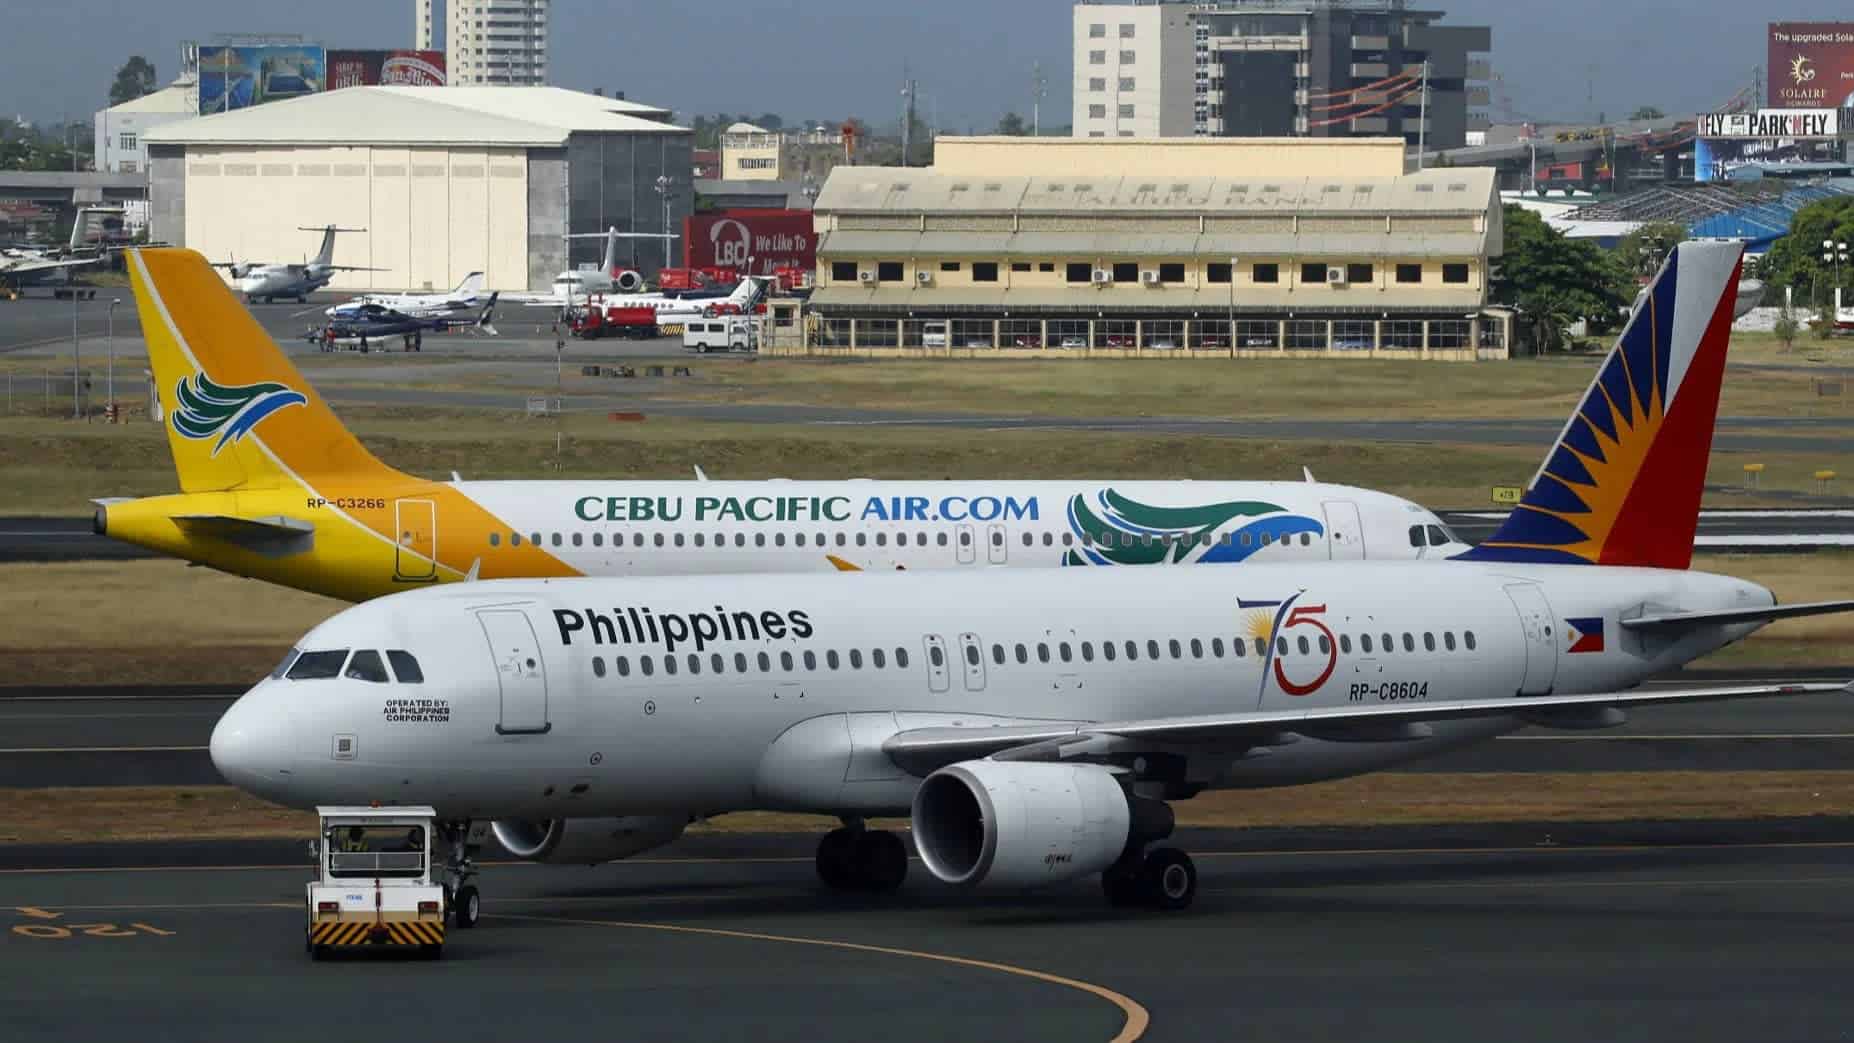 Cebu Airport Planes (2)